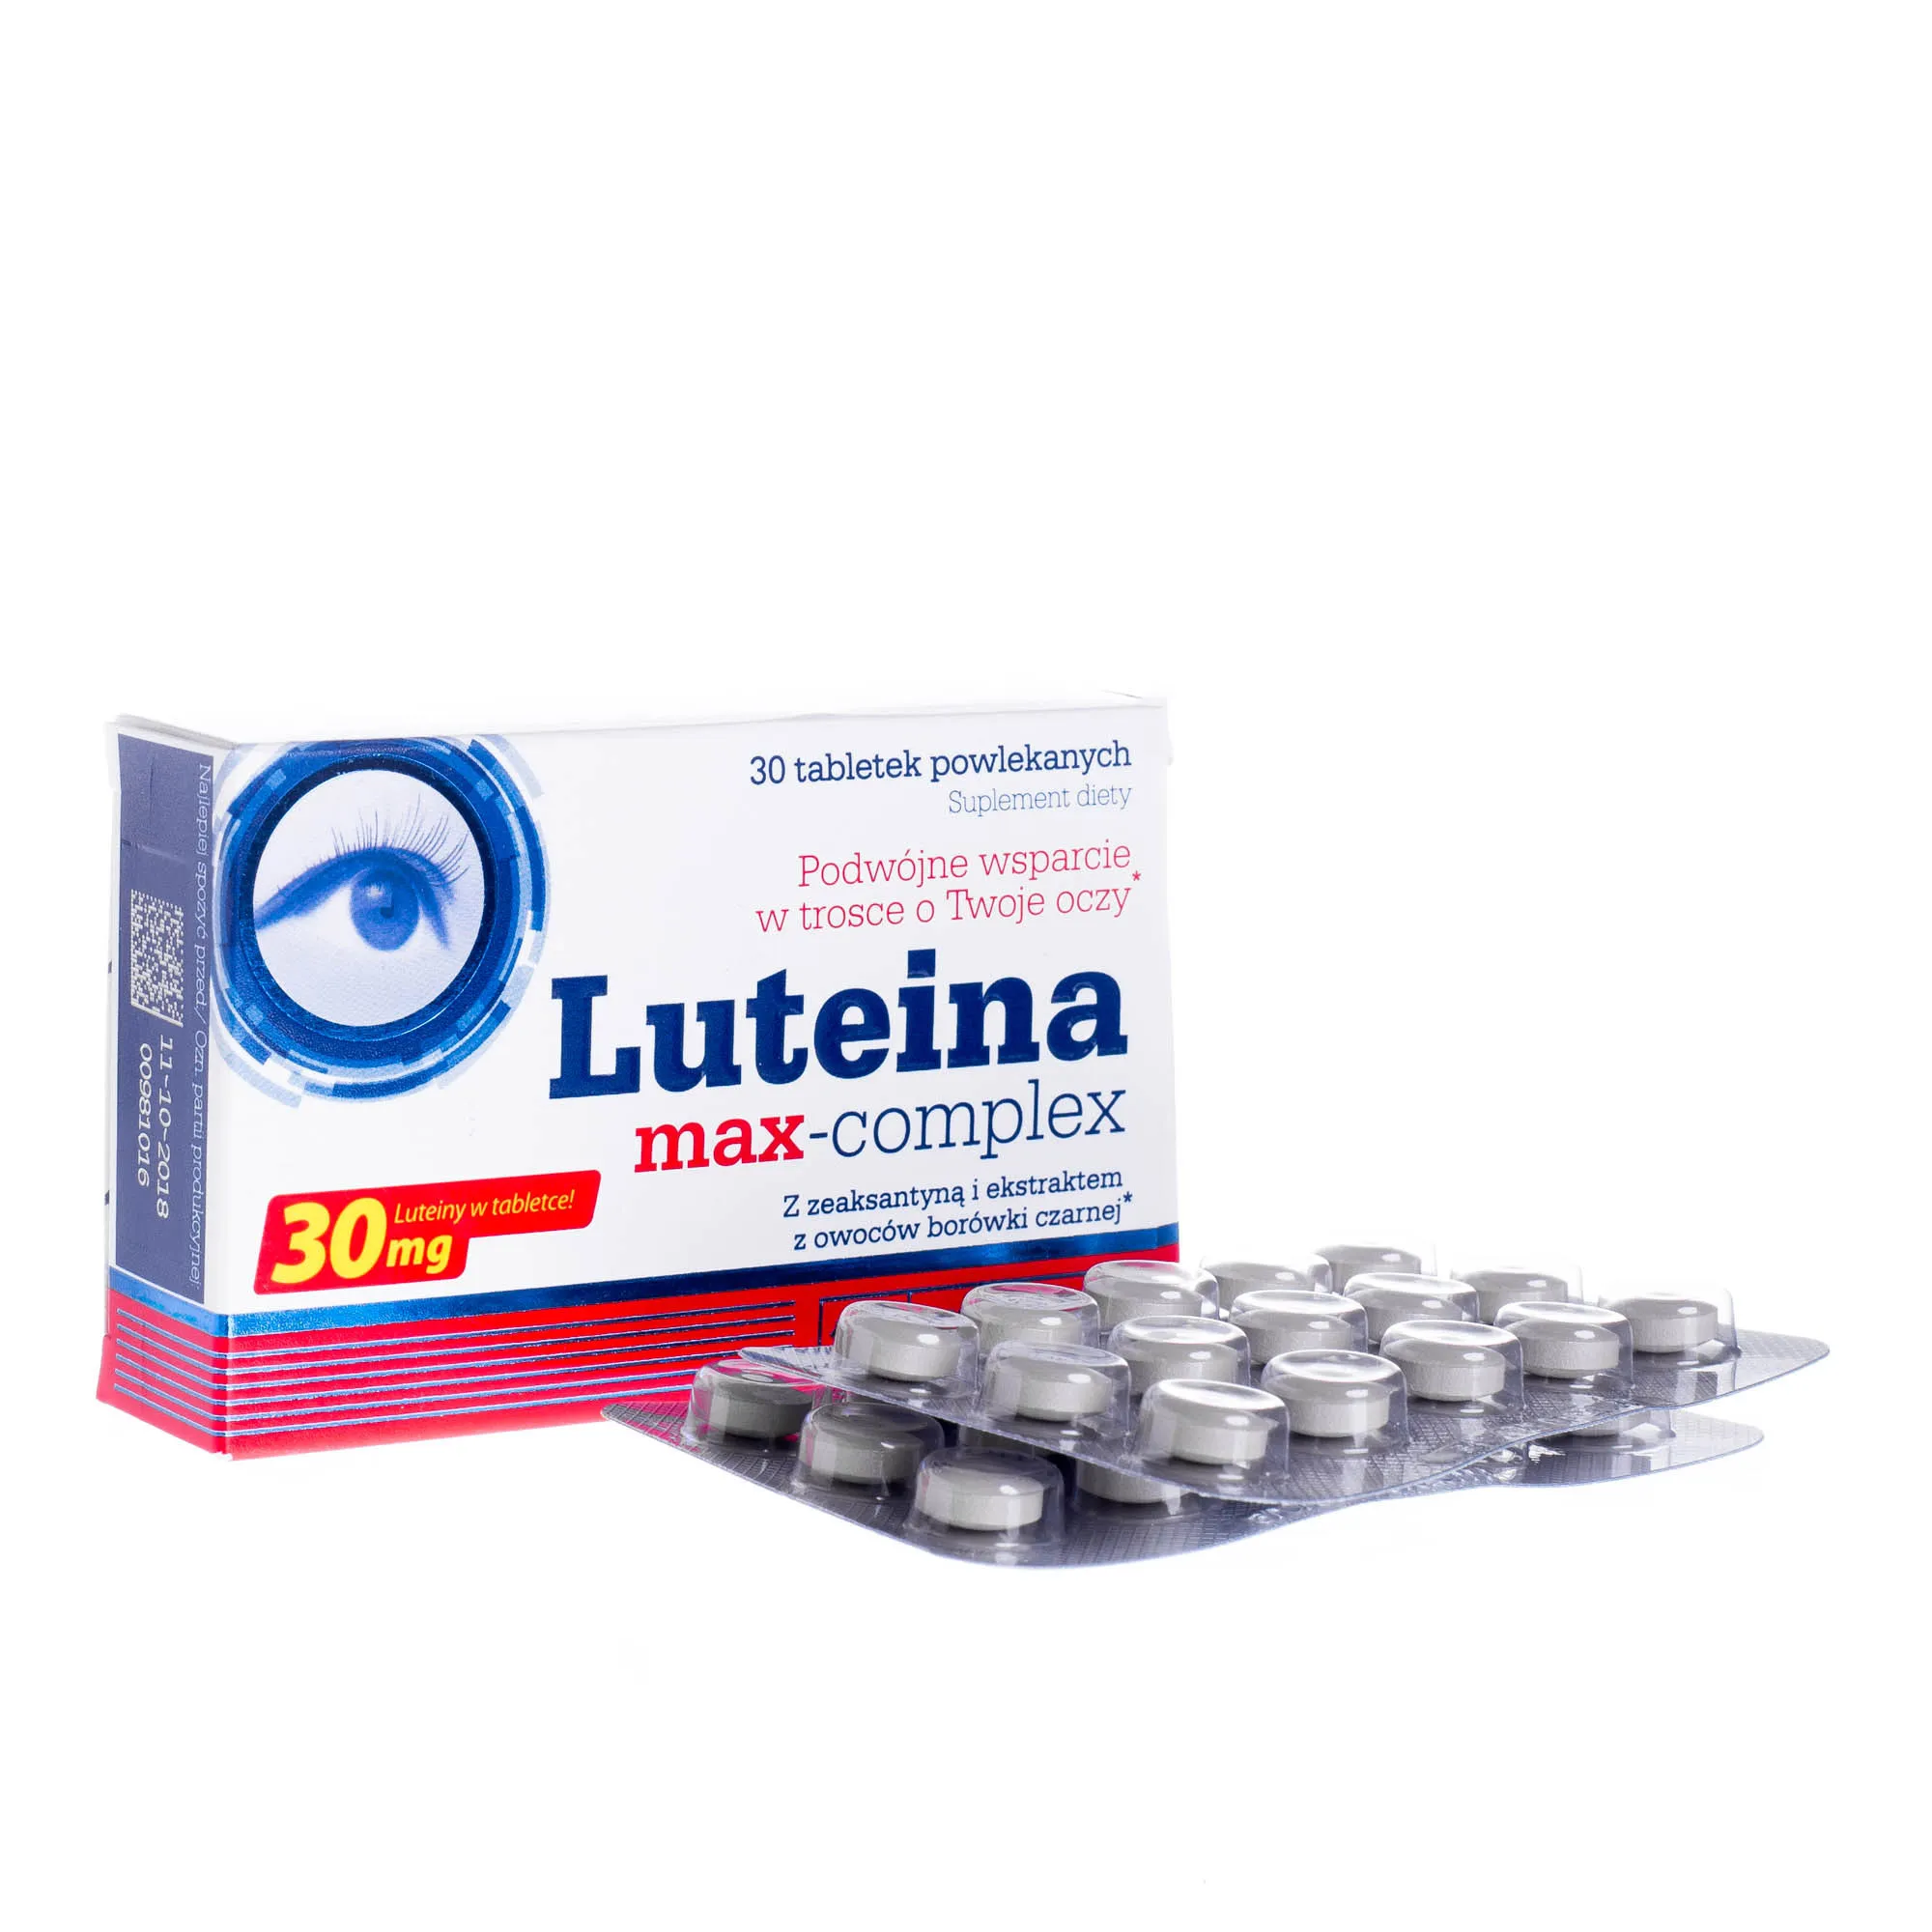 Olimp Luteina Max-Complex, suplement diety, 30 tabletek powlekanych 